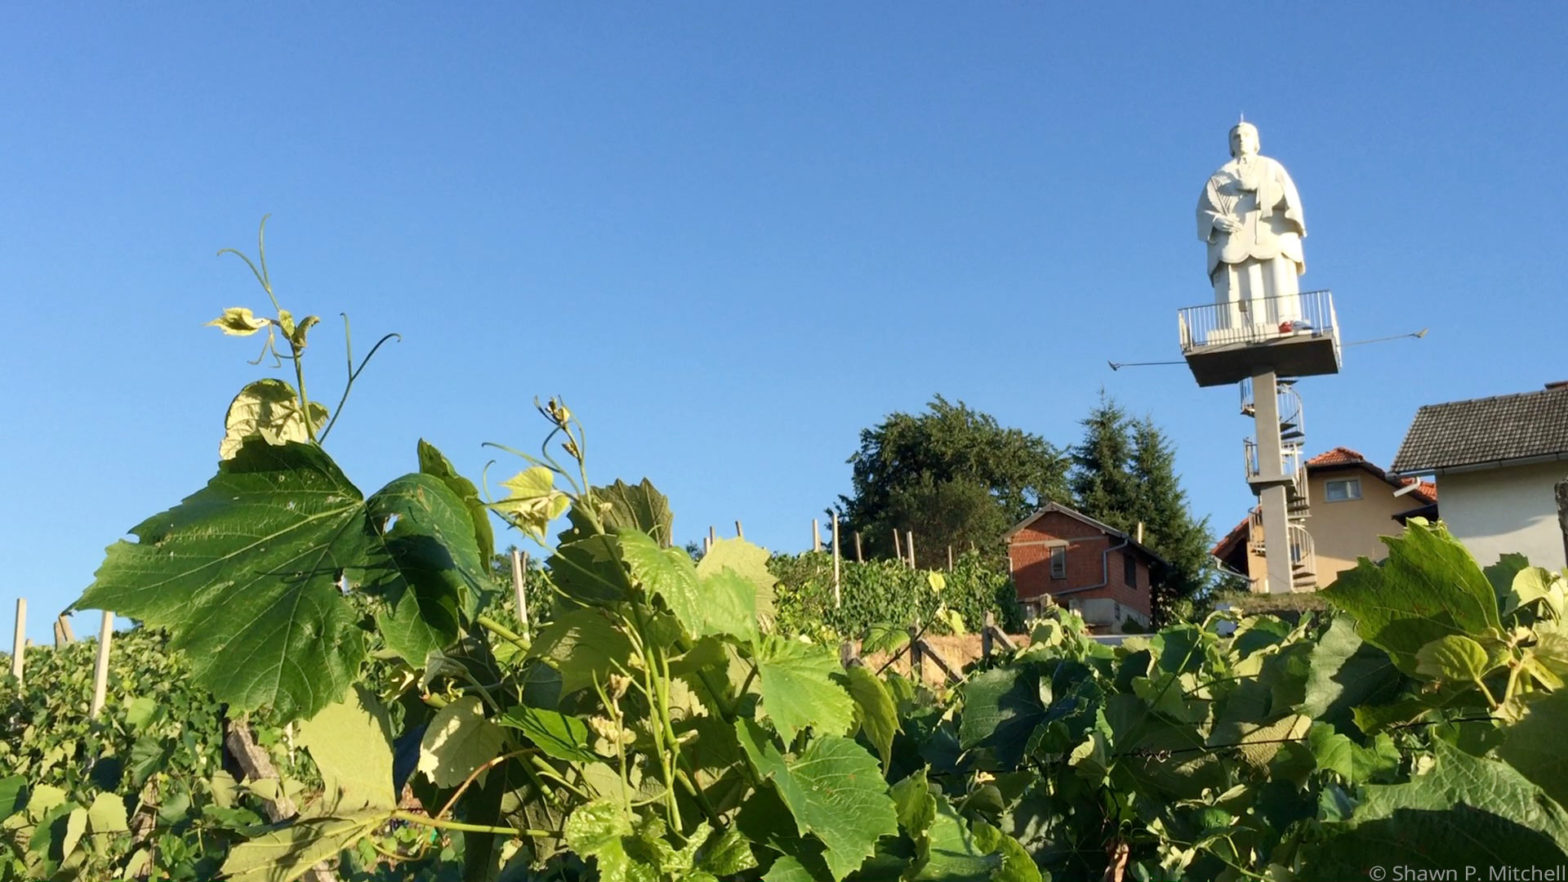 A statue stands above a vineyard in northern Croatia.